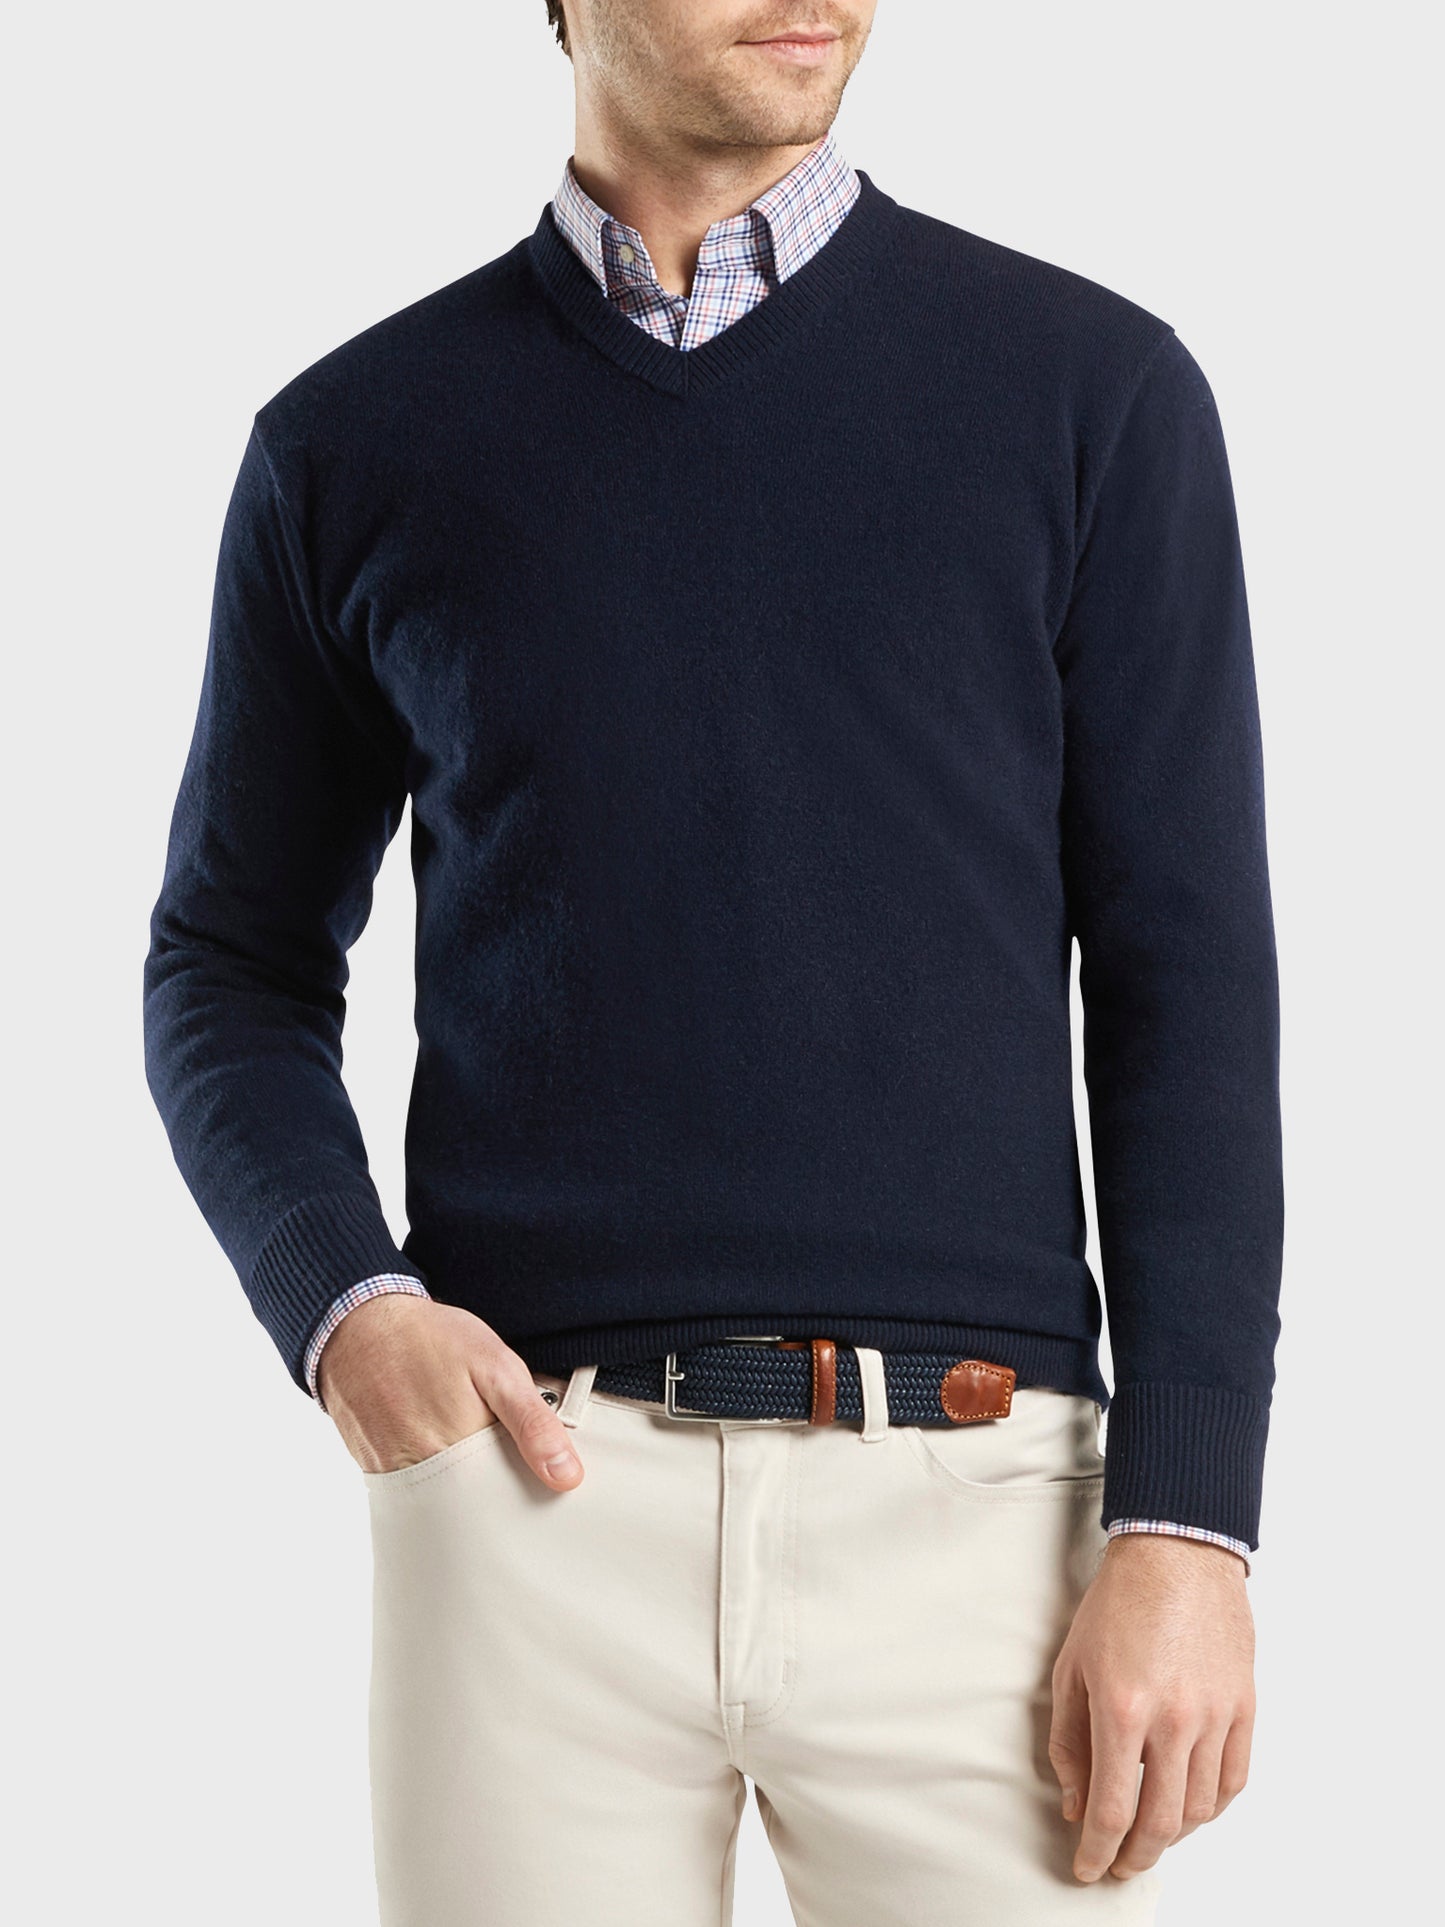 Peter Millar Crown Men's Crown Soft Cashmere V-Neck Sweater